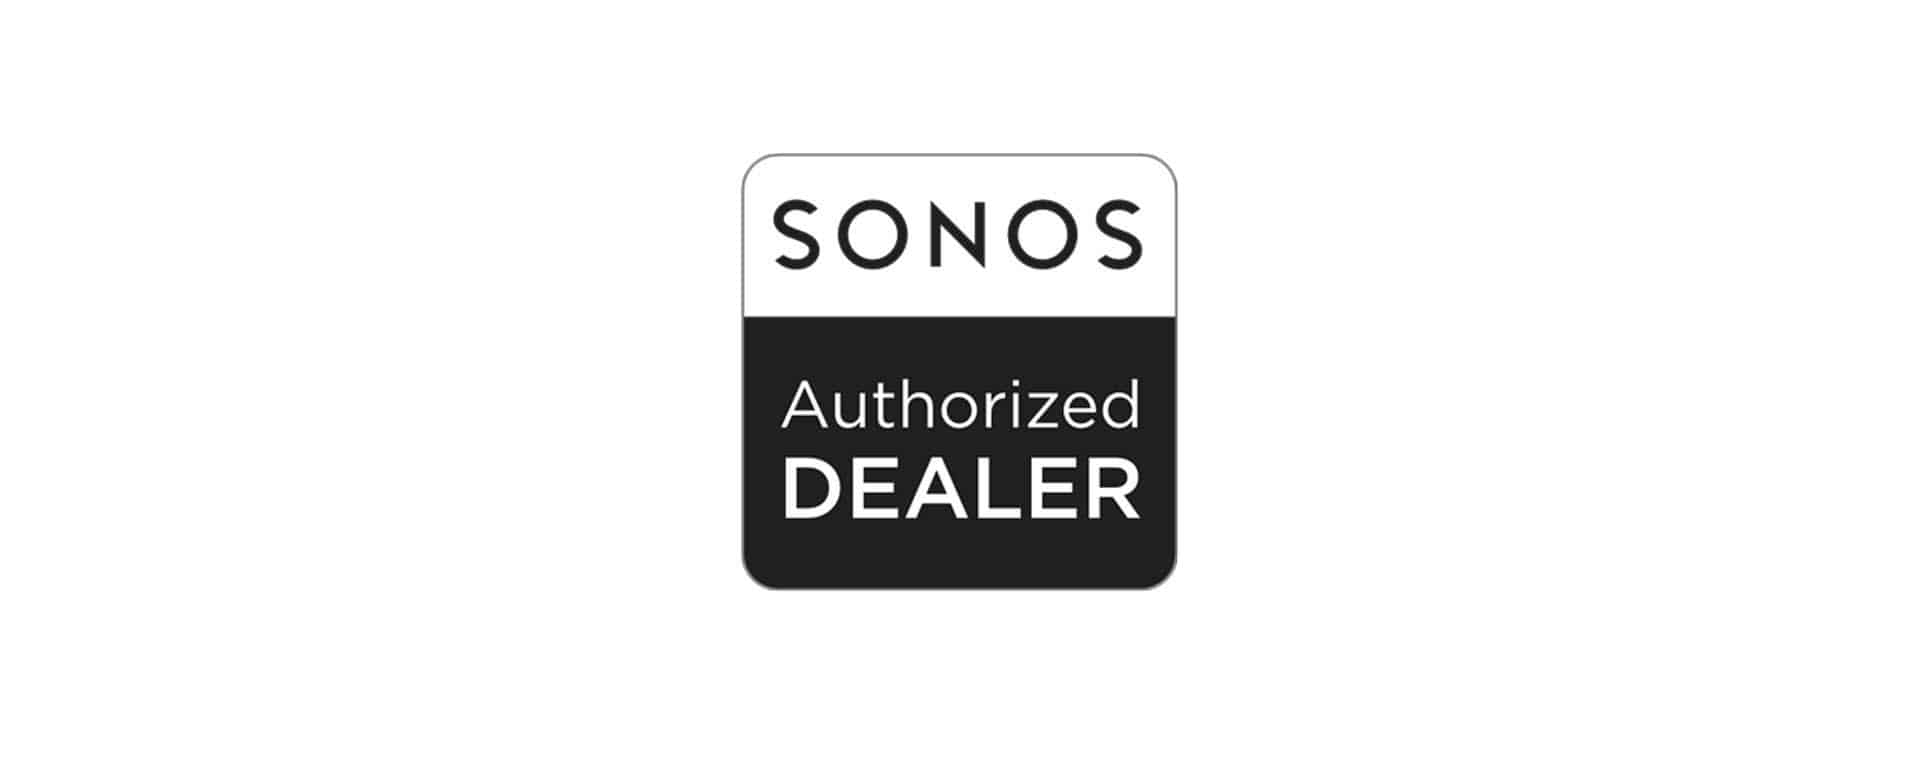 Sonos-Authorized-dealer-logo